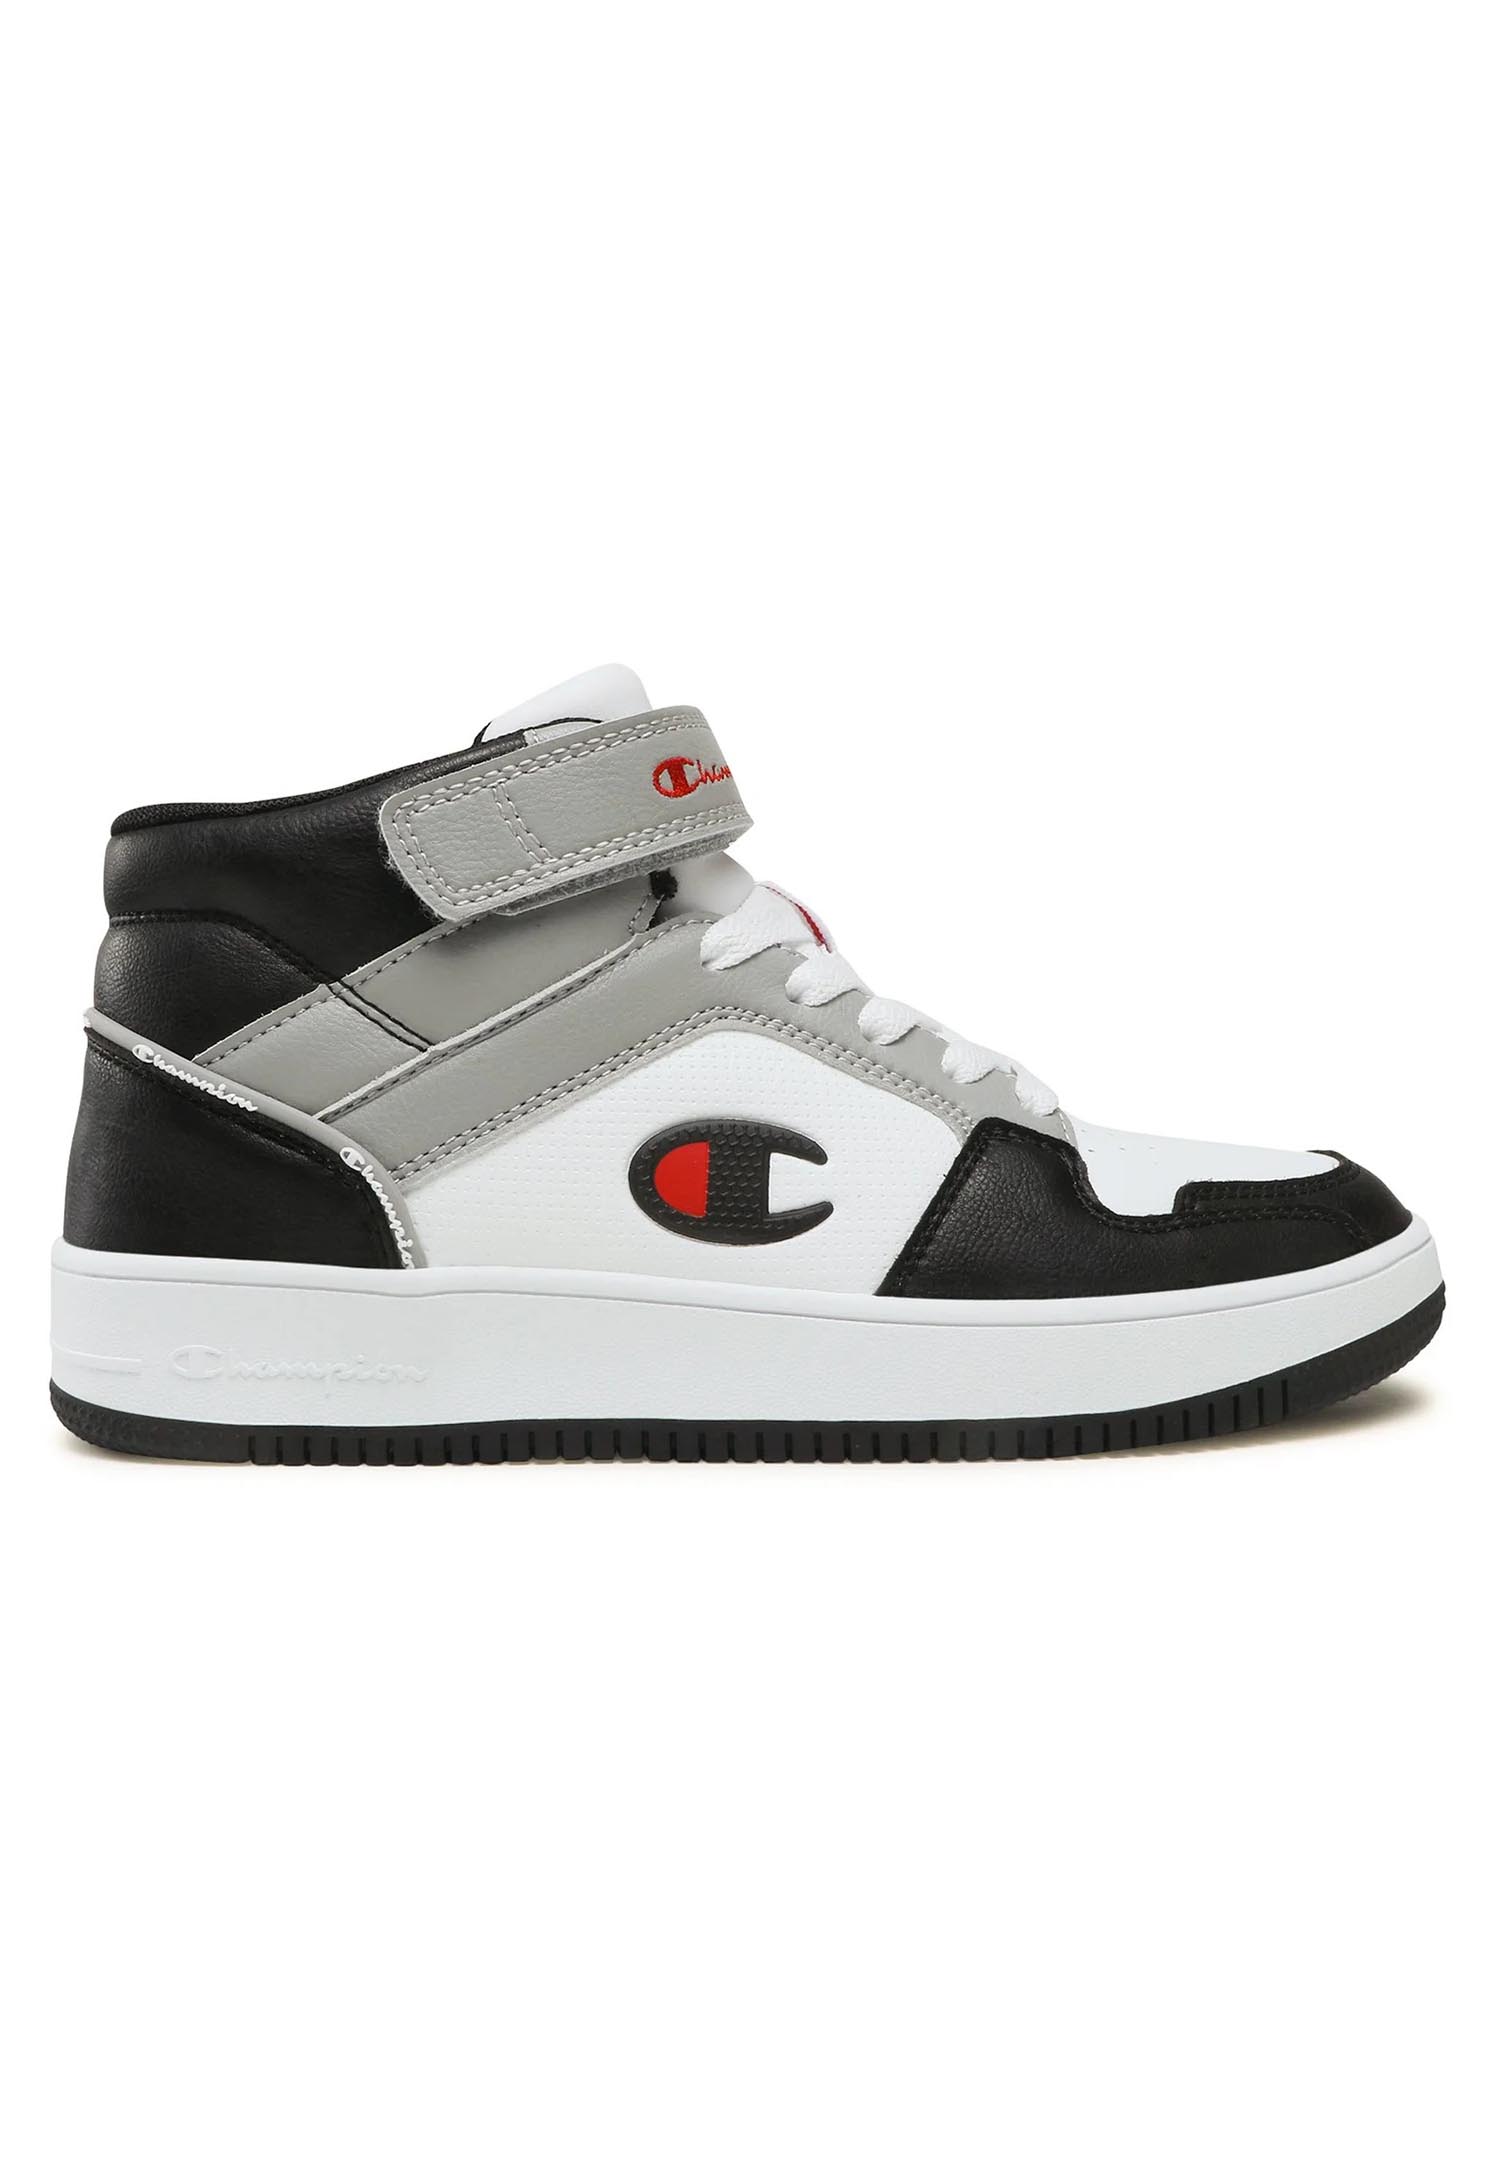 GS Sneaker schwarz Champion MID S32413-CHA-WW014 REBOUND B Kinder 2.0 weiss/grau/